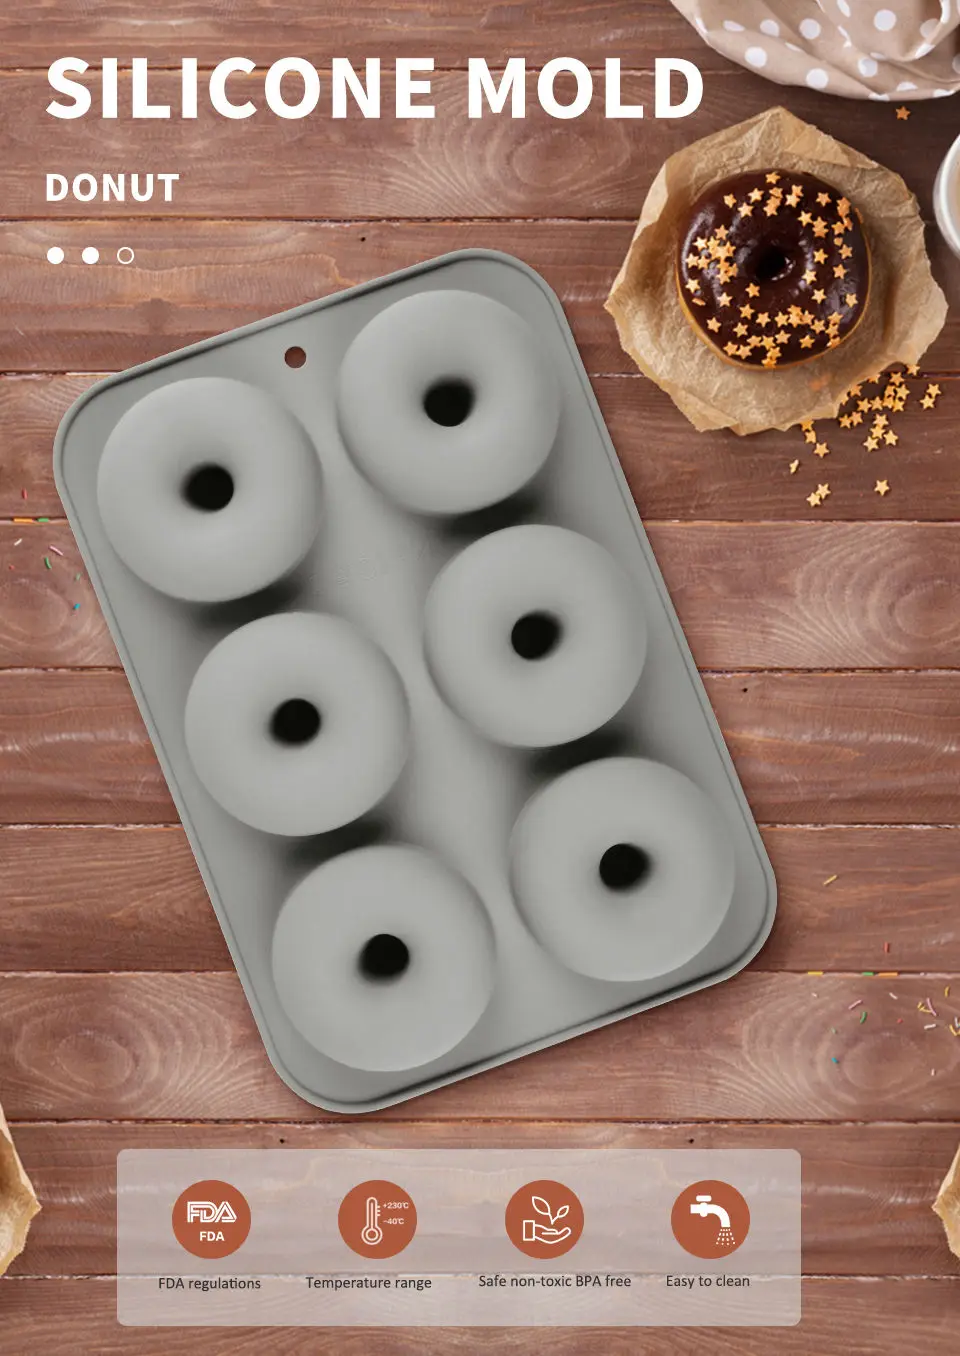 Custom 6 Cavity Silicone Donut Baking Pan Cake Decorating Tools Cake Cookies Molde De Silicone